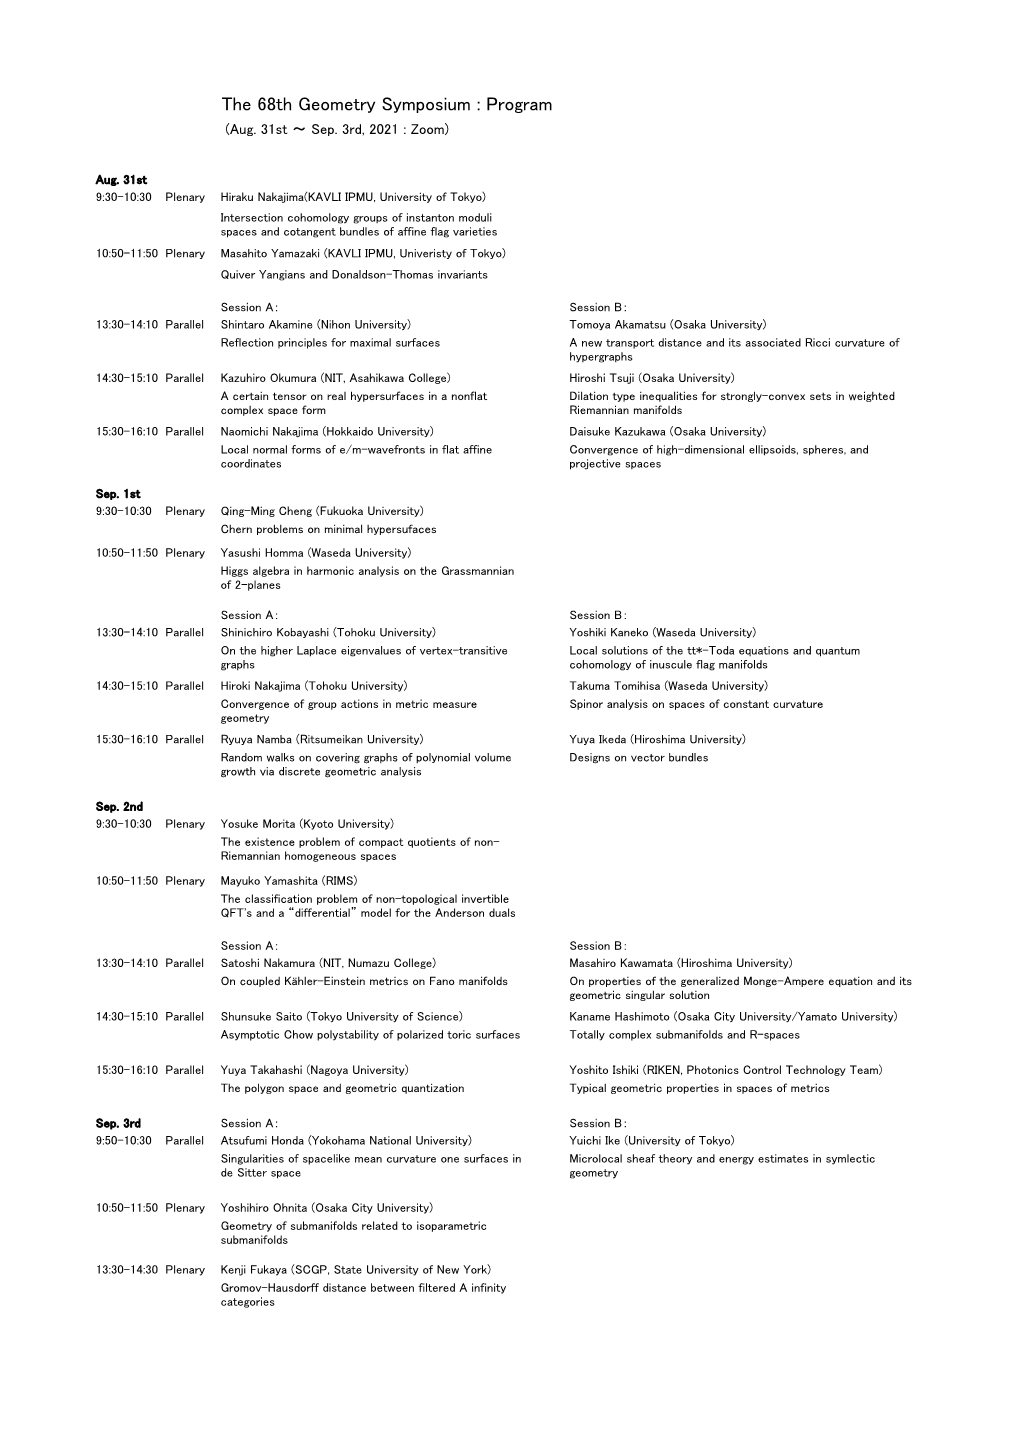 The 68Th Geometry Symposium : Program (Aug